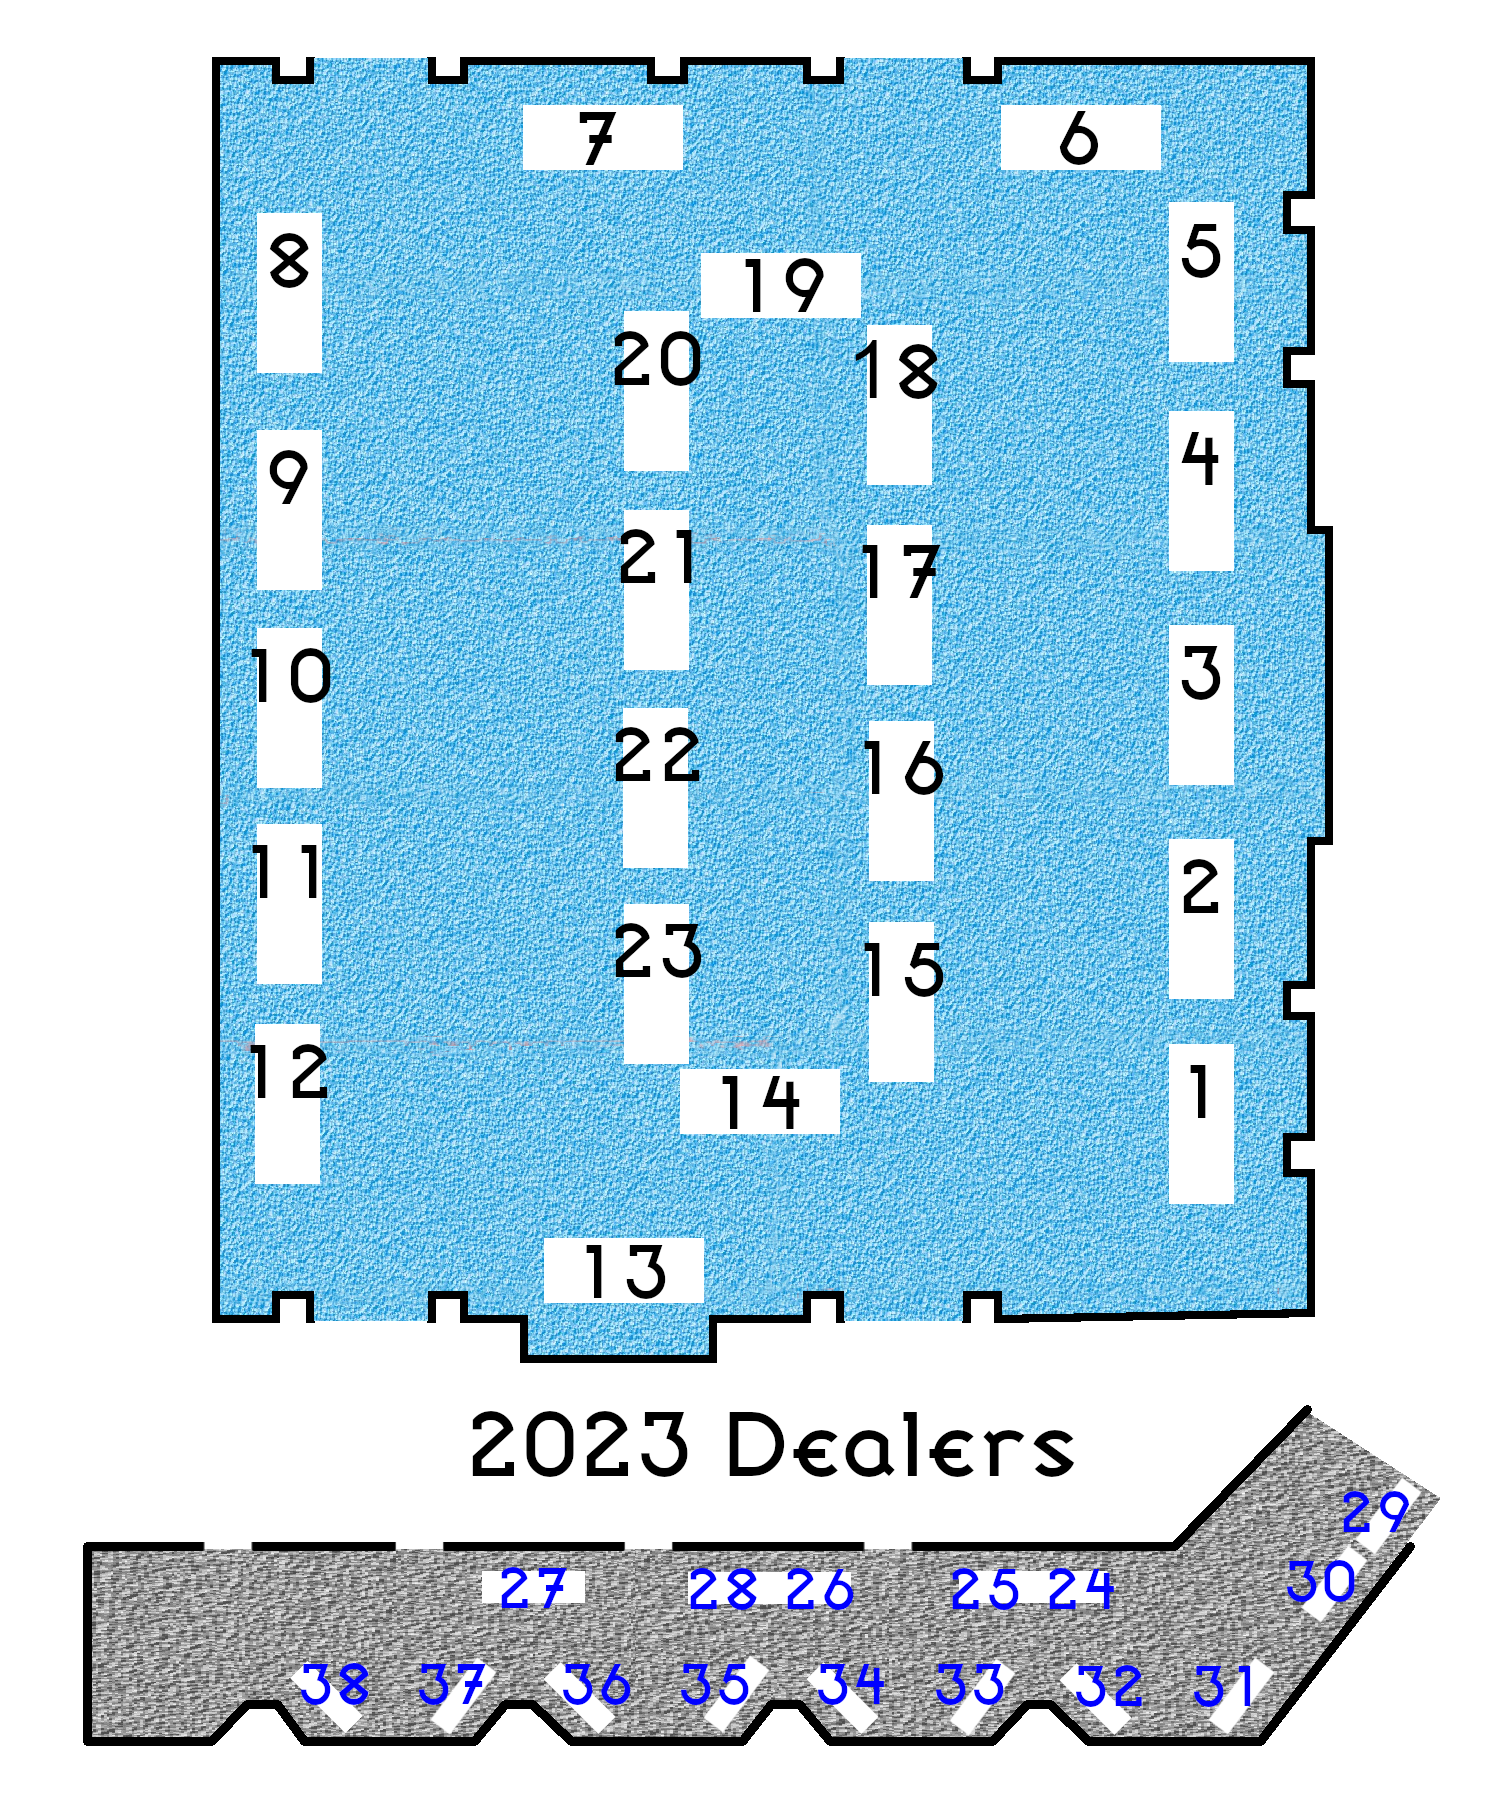 Dealers Room Map